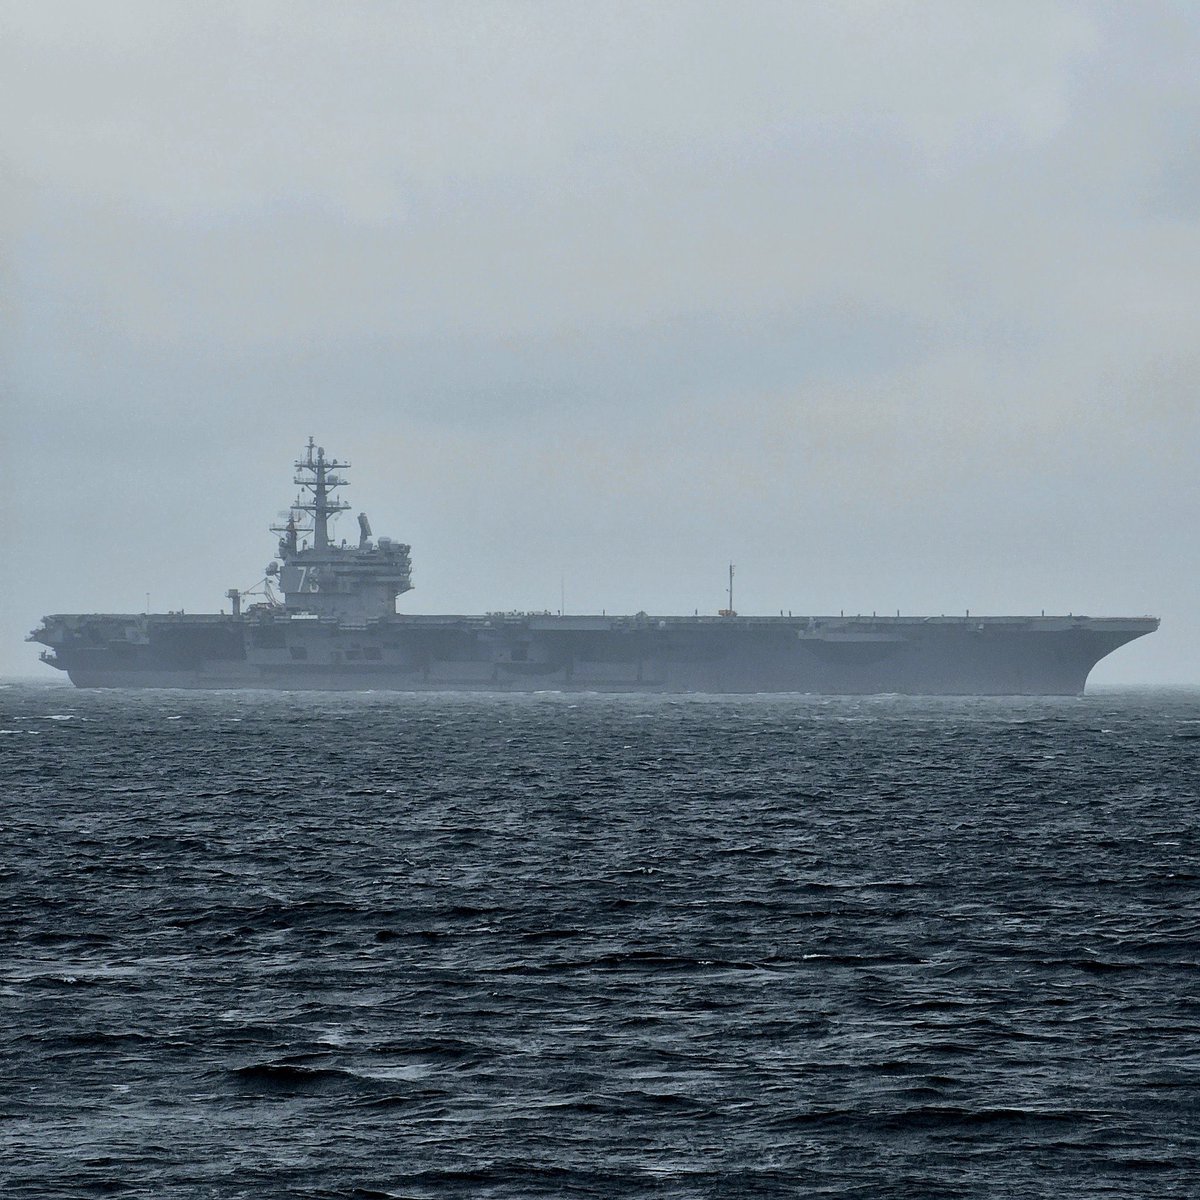 USS Ronald Reagan (CVN 76) Nimitz-class aircraft carrier leaving Yokosuka, Japan - May 23, 2023 #ussronaldreagan #cvn76

SRC: TW-@MICHIYAM